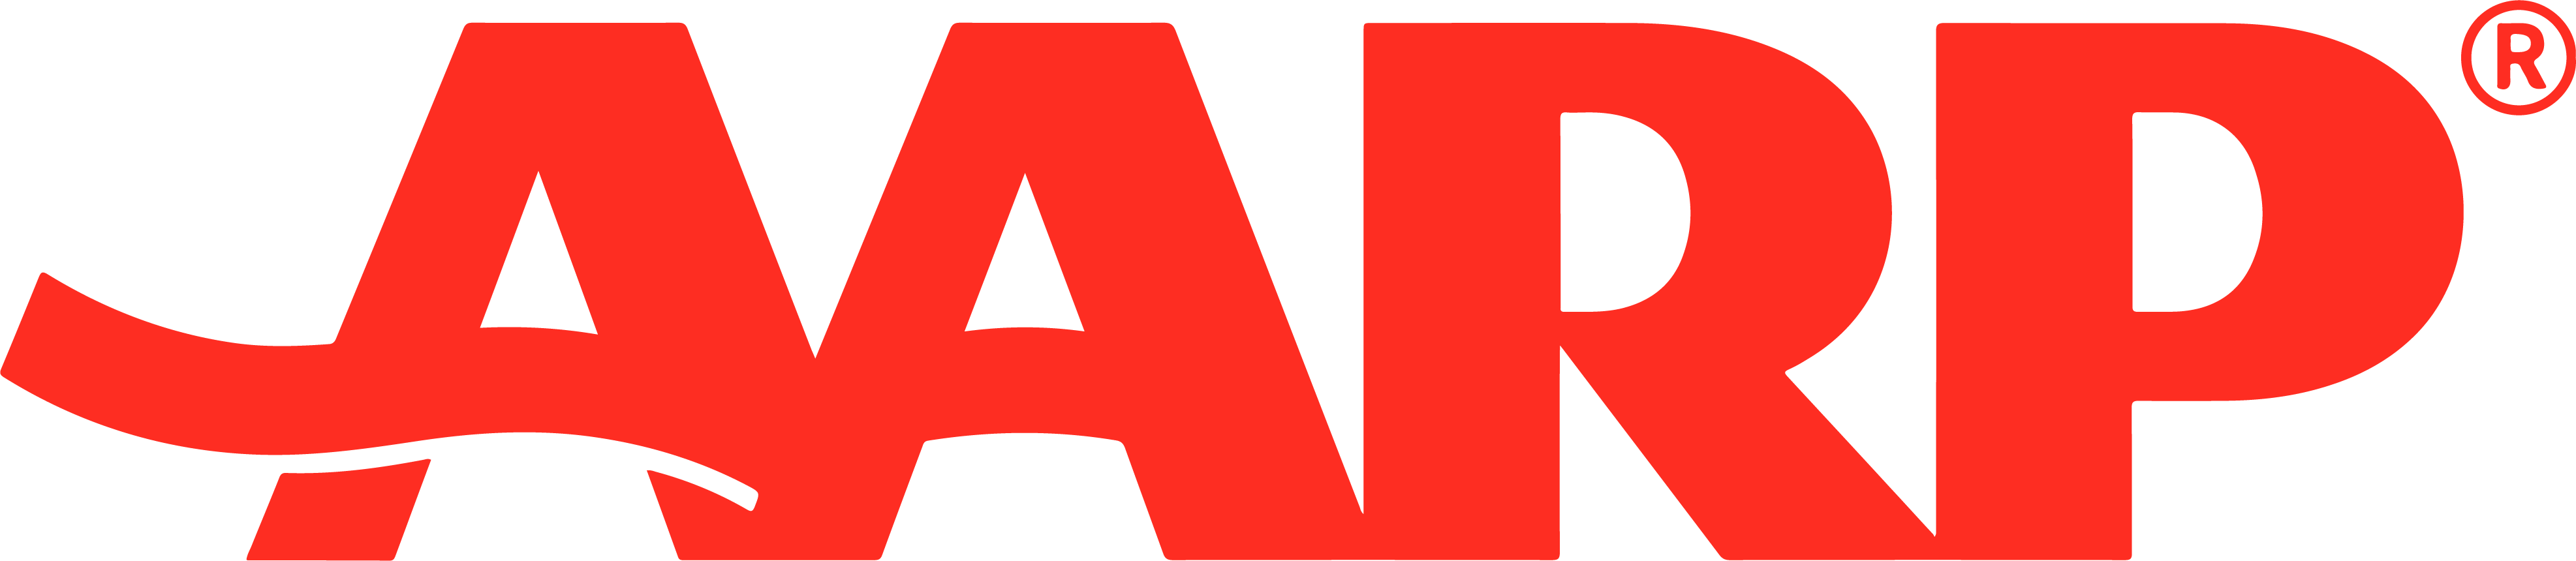 Aarp_logo_PNG3.png